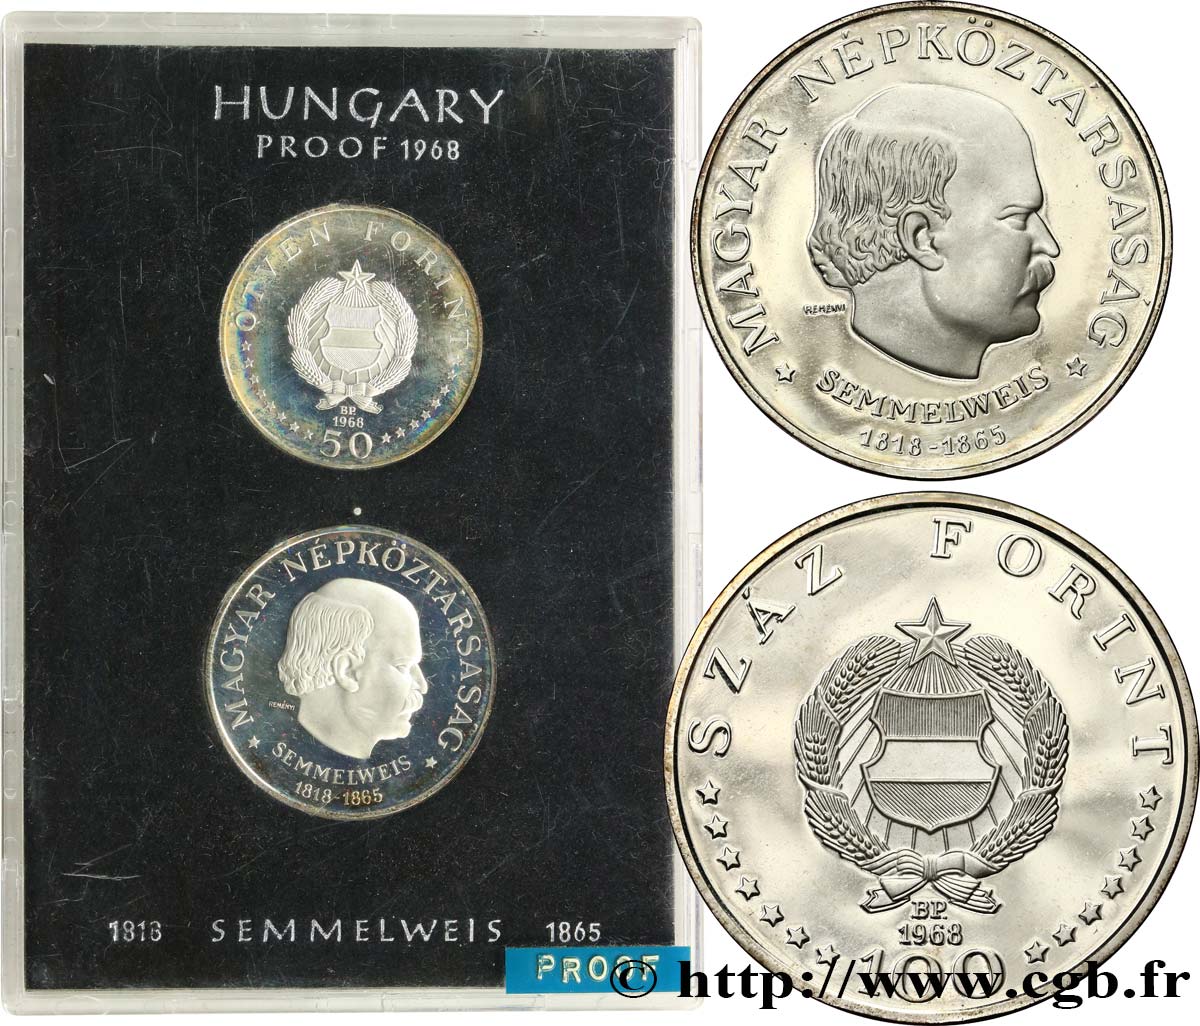 HUNGRíA Série Proof - 2 monnaies - Ignác Semmelweis 1968 Budapest Prueba 